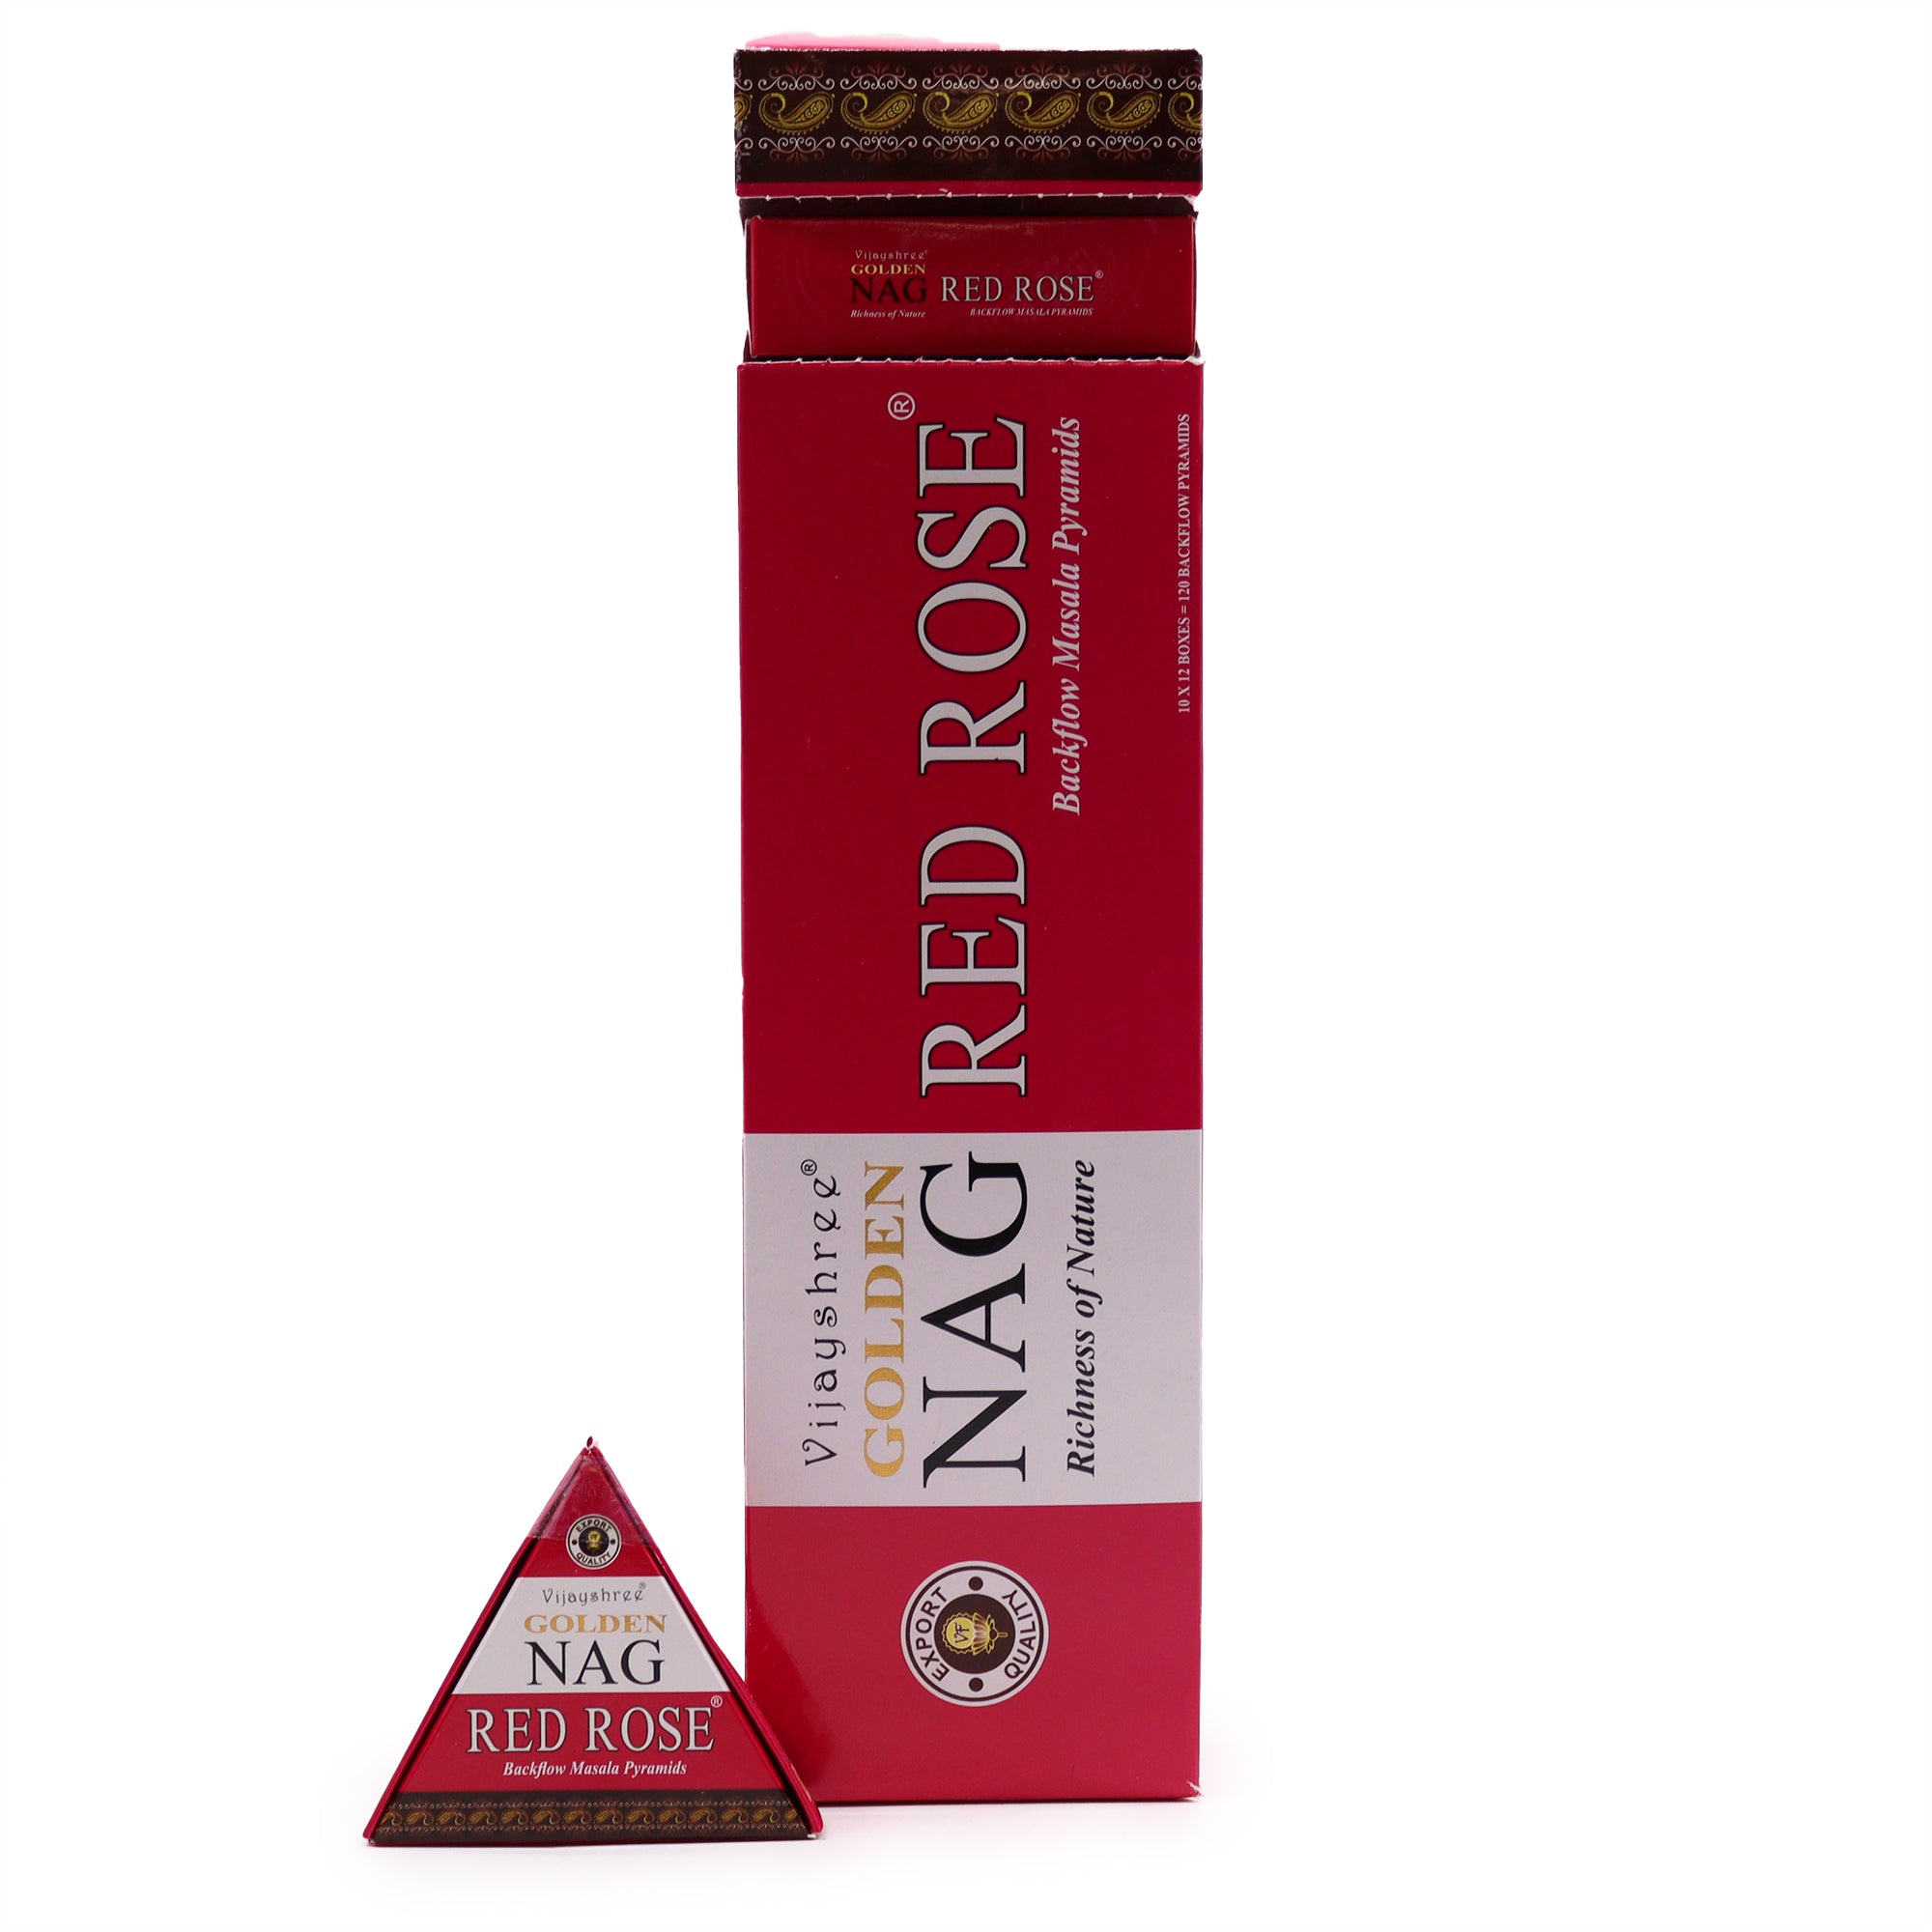 View 42g Jumbo Golden Nag Red Rose Backflow Incense Cones information